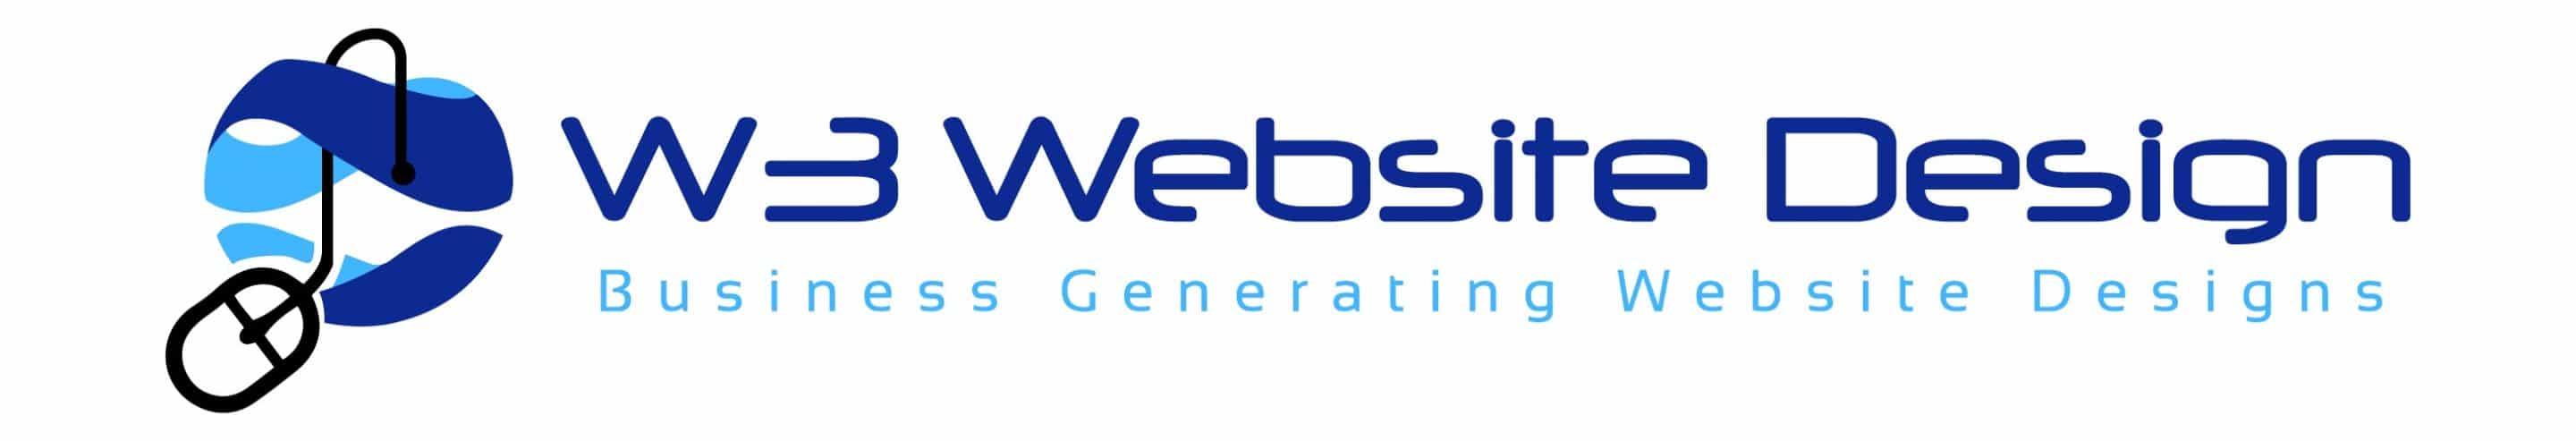 W3 Website Design